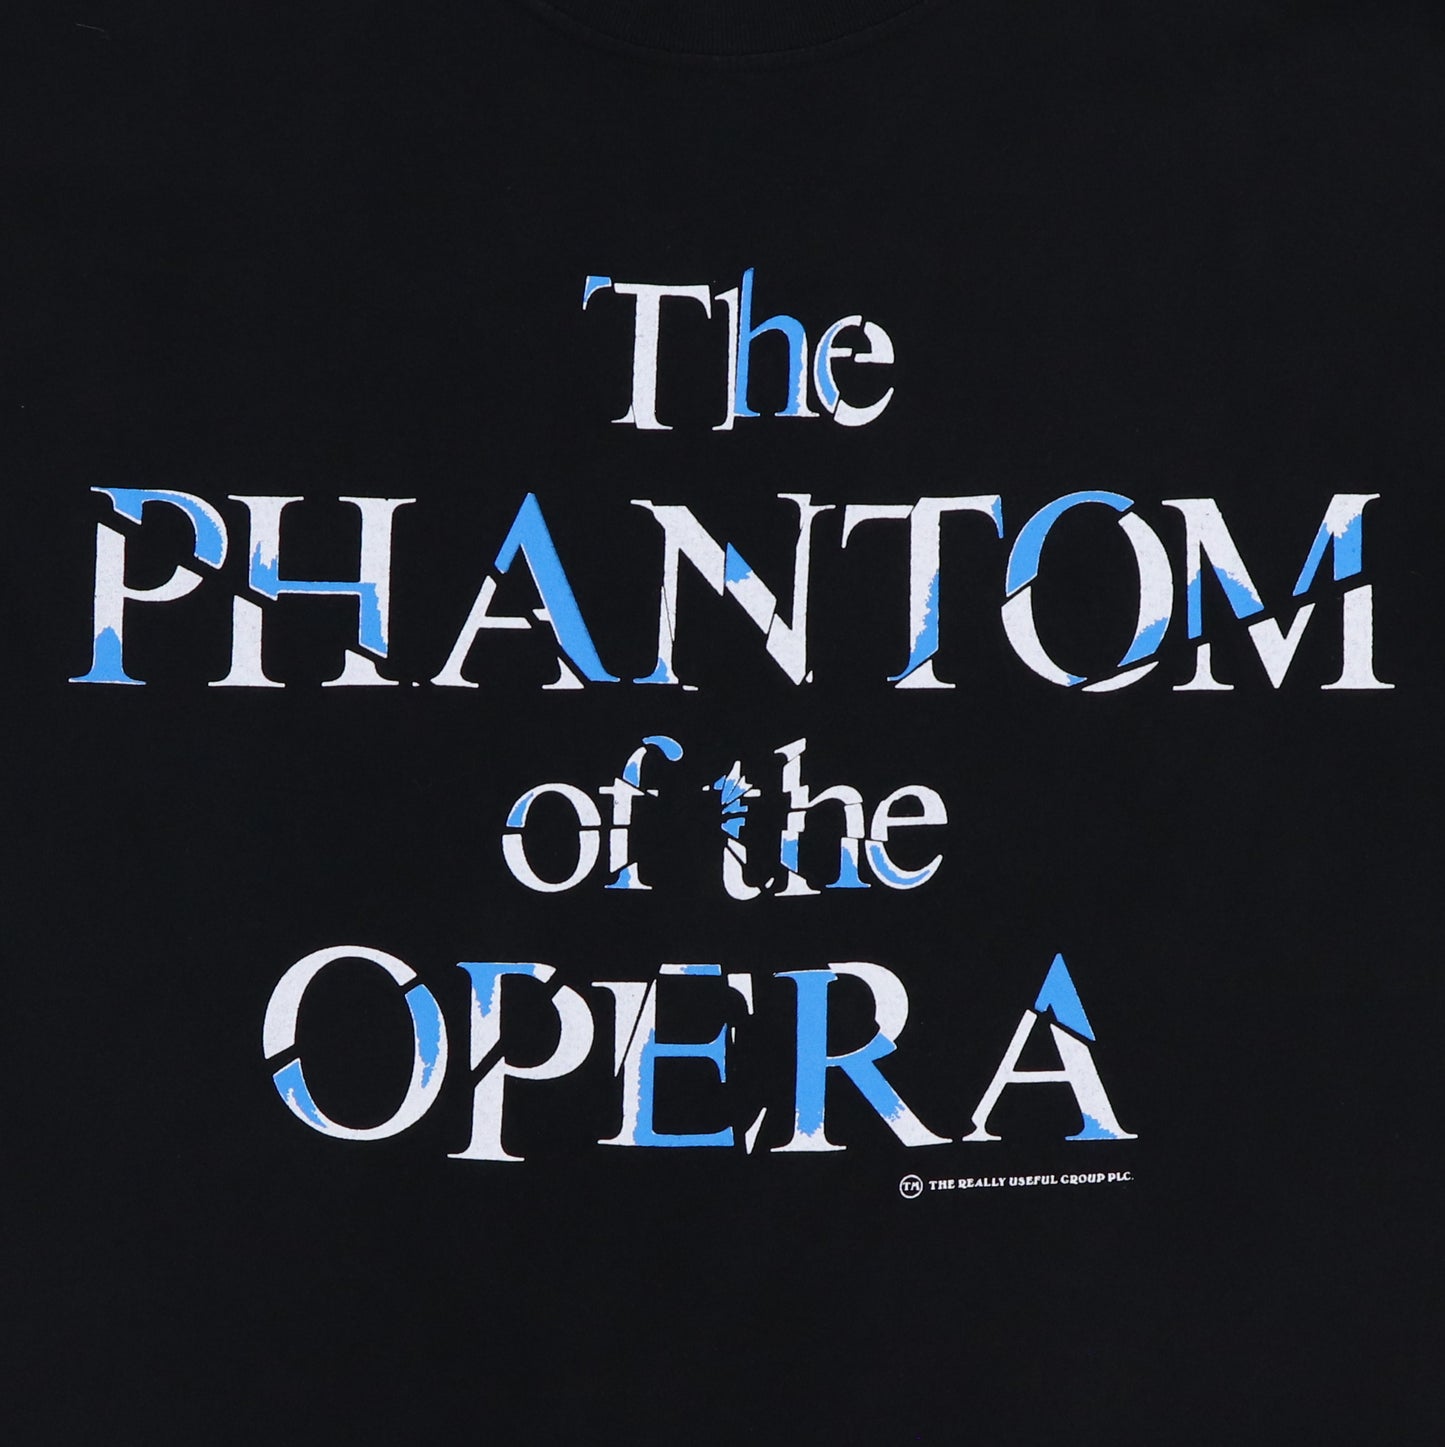 1986 Phantom Of The Opera Shirt